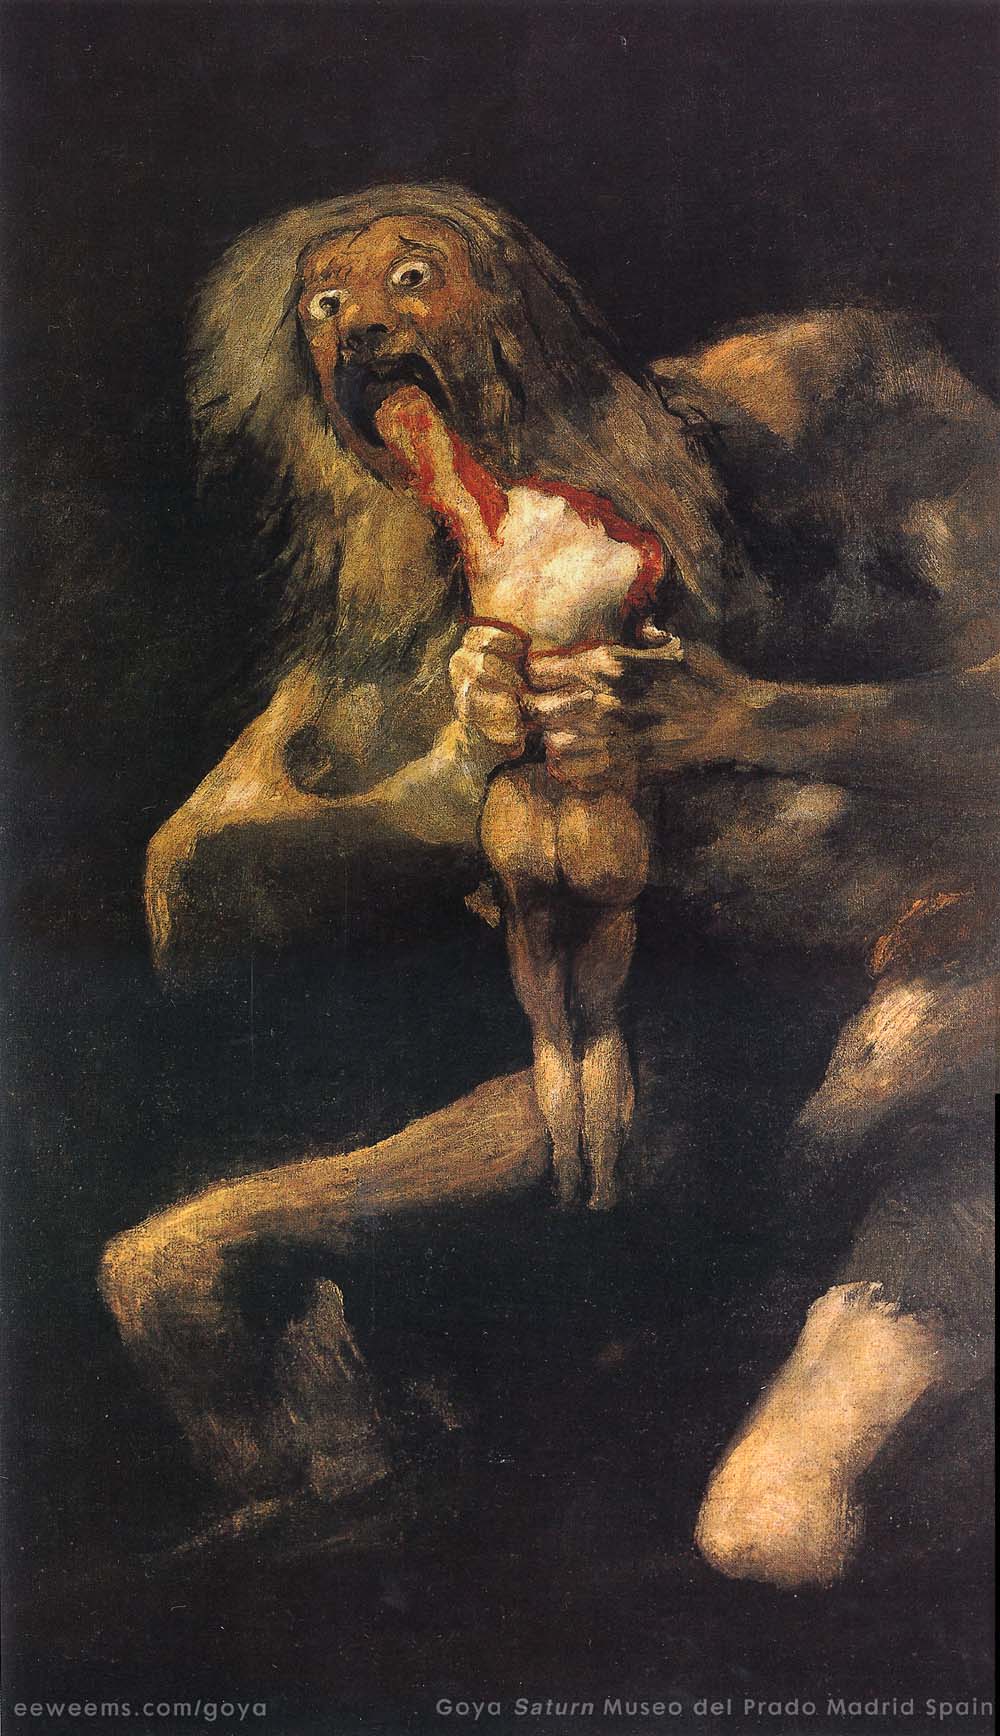 Saturn Painting Goya